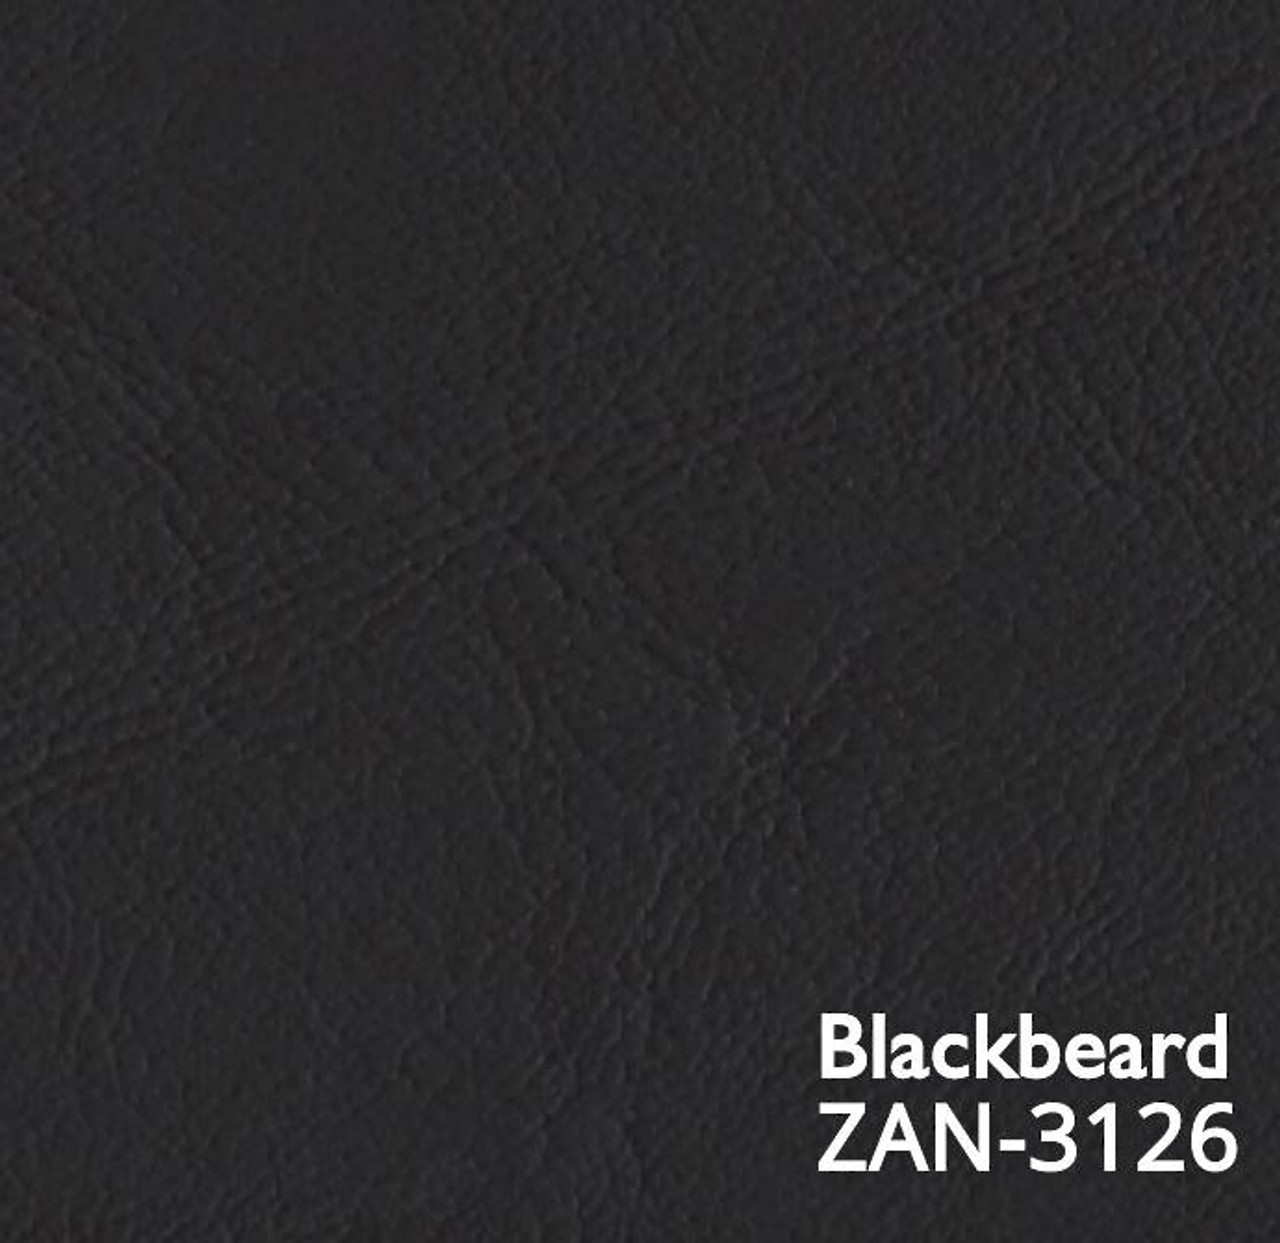 Blackbeard Black Marine Vinyl Fabric, ZAN-3126, Spradling Softside ZANDER, Upholstery Vinyl for Boats / Automotive / Commercial Seating, 54W